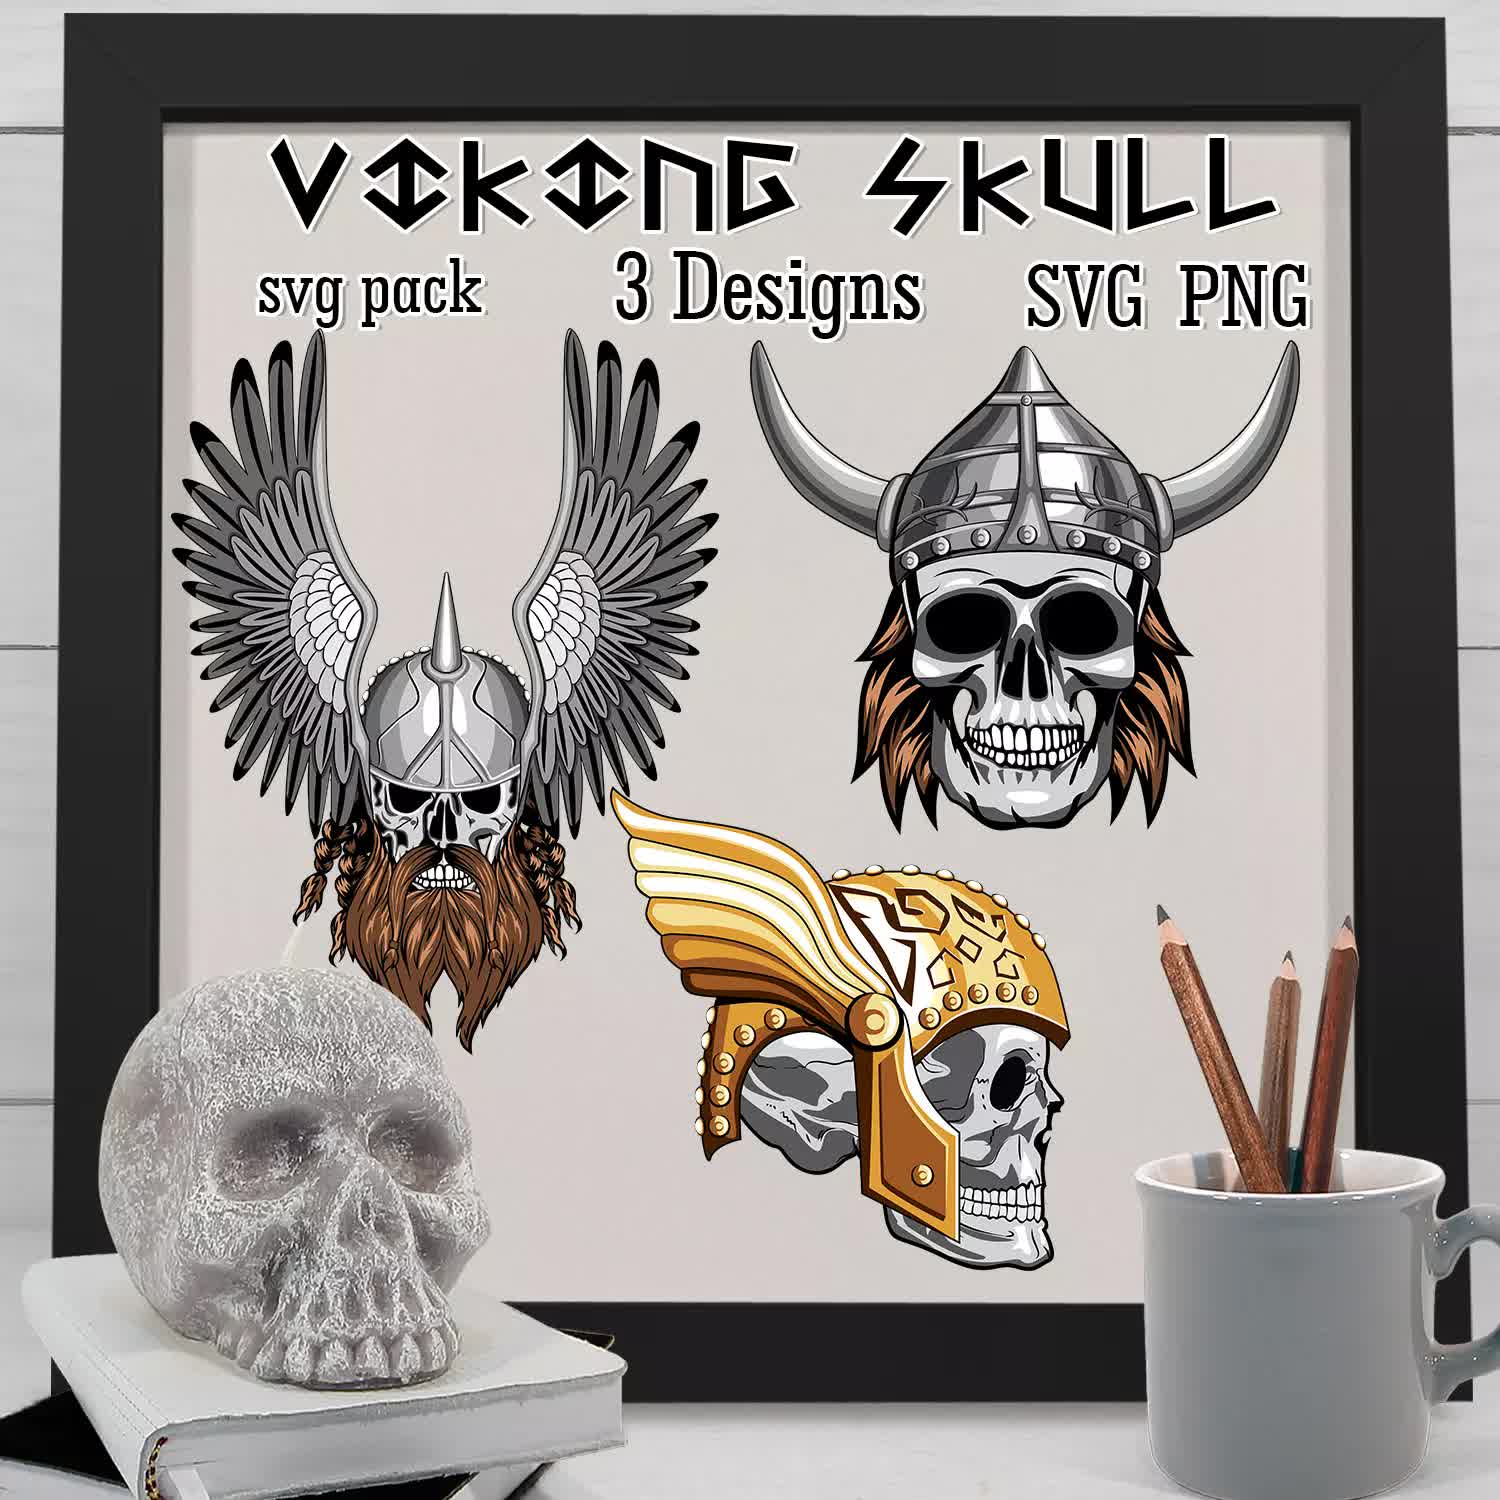 Big Viking SVG Bundle 56 Files Preview 6.